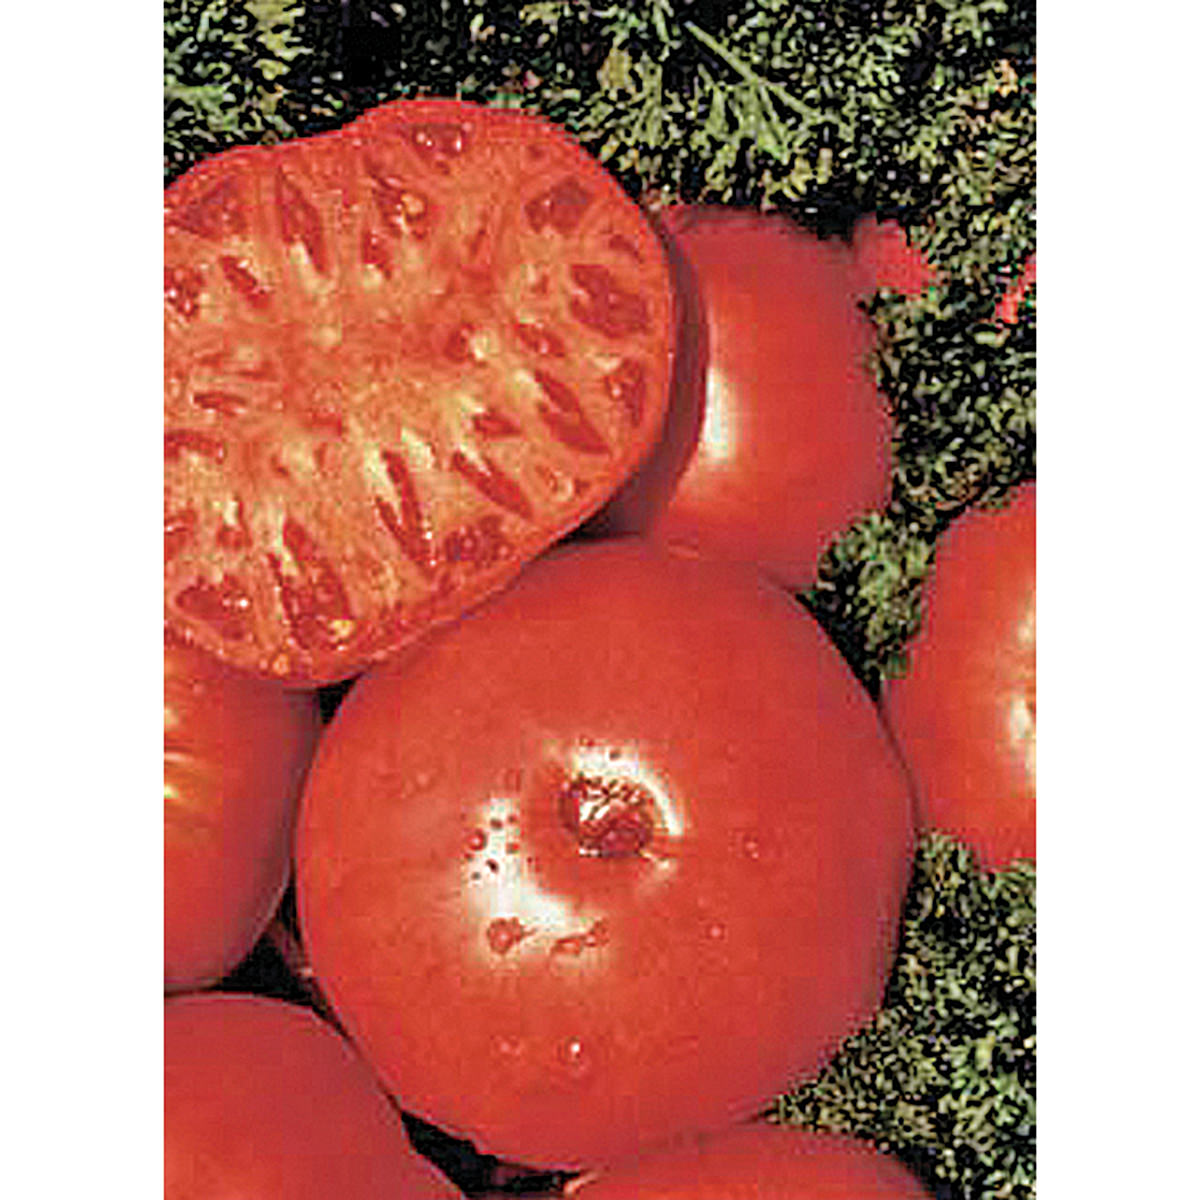 Certified Organic Brandywine Red Tomato Seeds